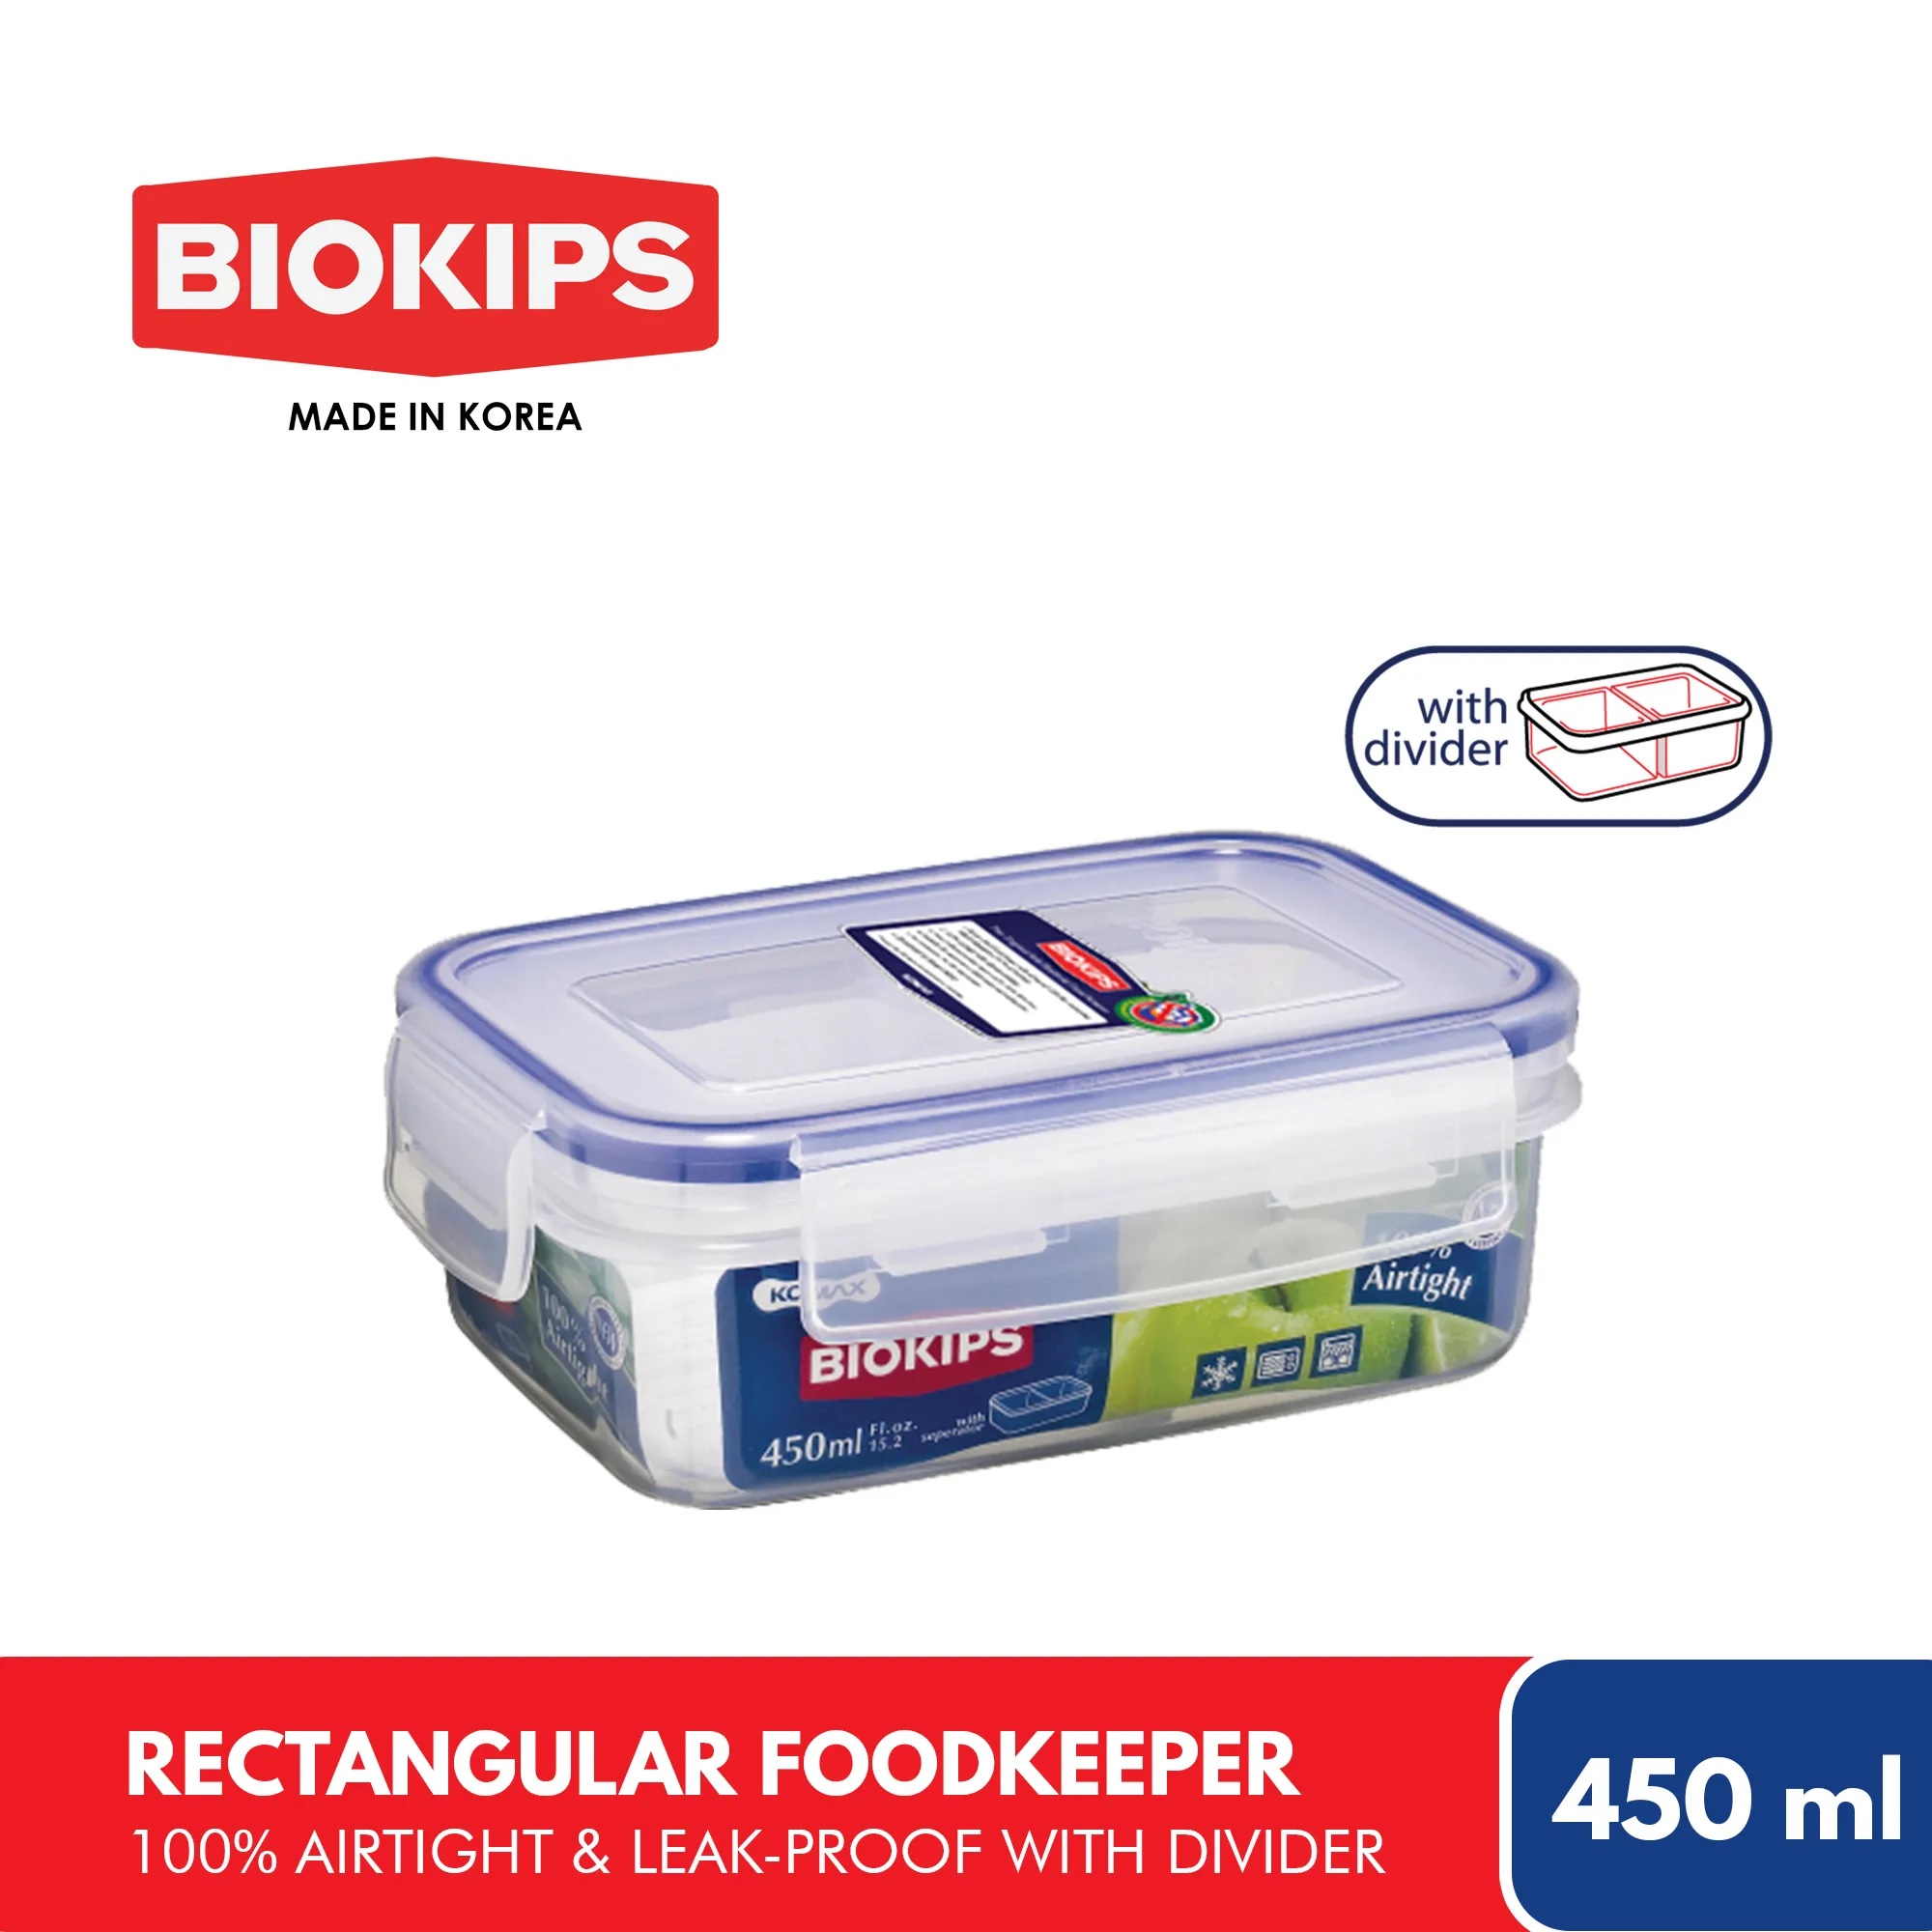 Komax Biokips Rectangular Air & Water Tight Food Container 450ml